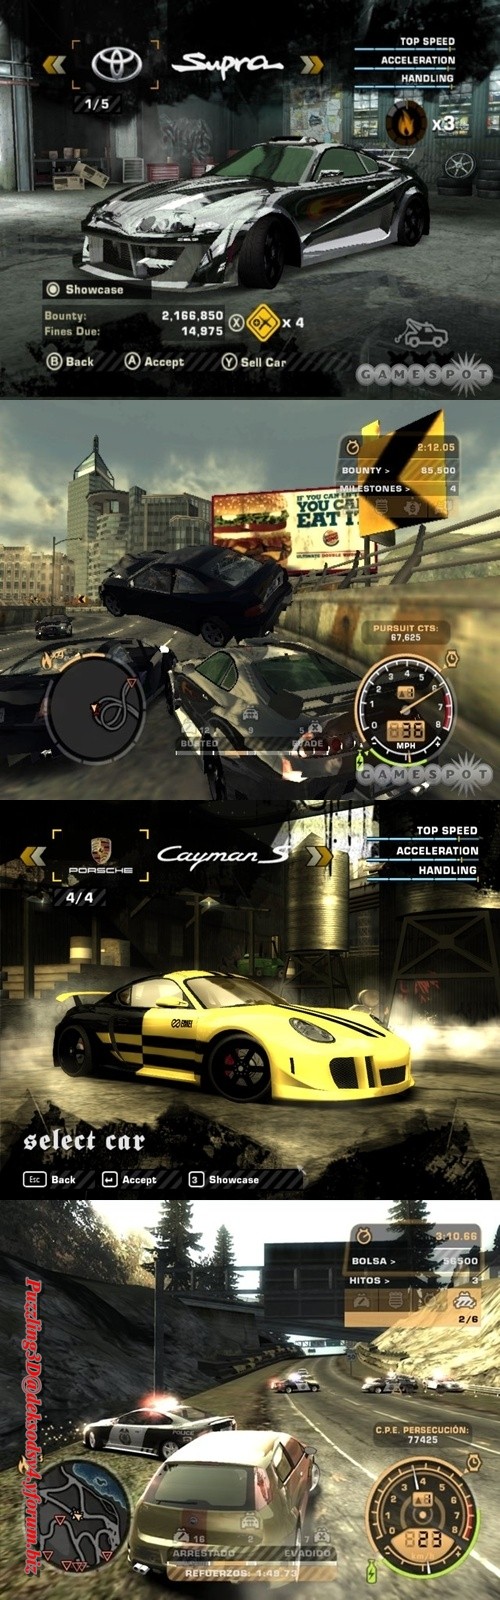 [PC] Need For Speed : Most Wanted 2005 Thai แถมภาค 2012 [ฺBitTorent + Repack + Update + Patch ภาษาไทย + Crack]	แถมการเพิ่มรถ และอื่นๆ รายละเอียดด้านใน... - Page 7 Need-f10